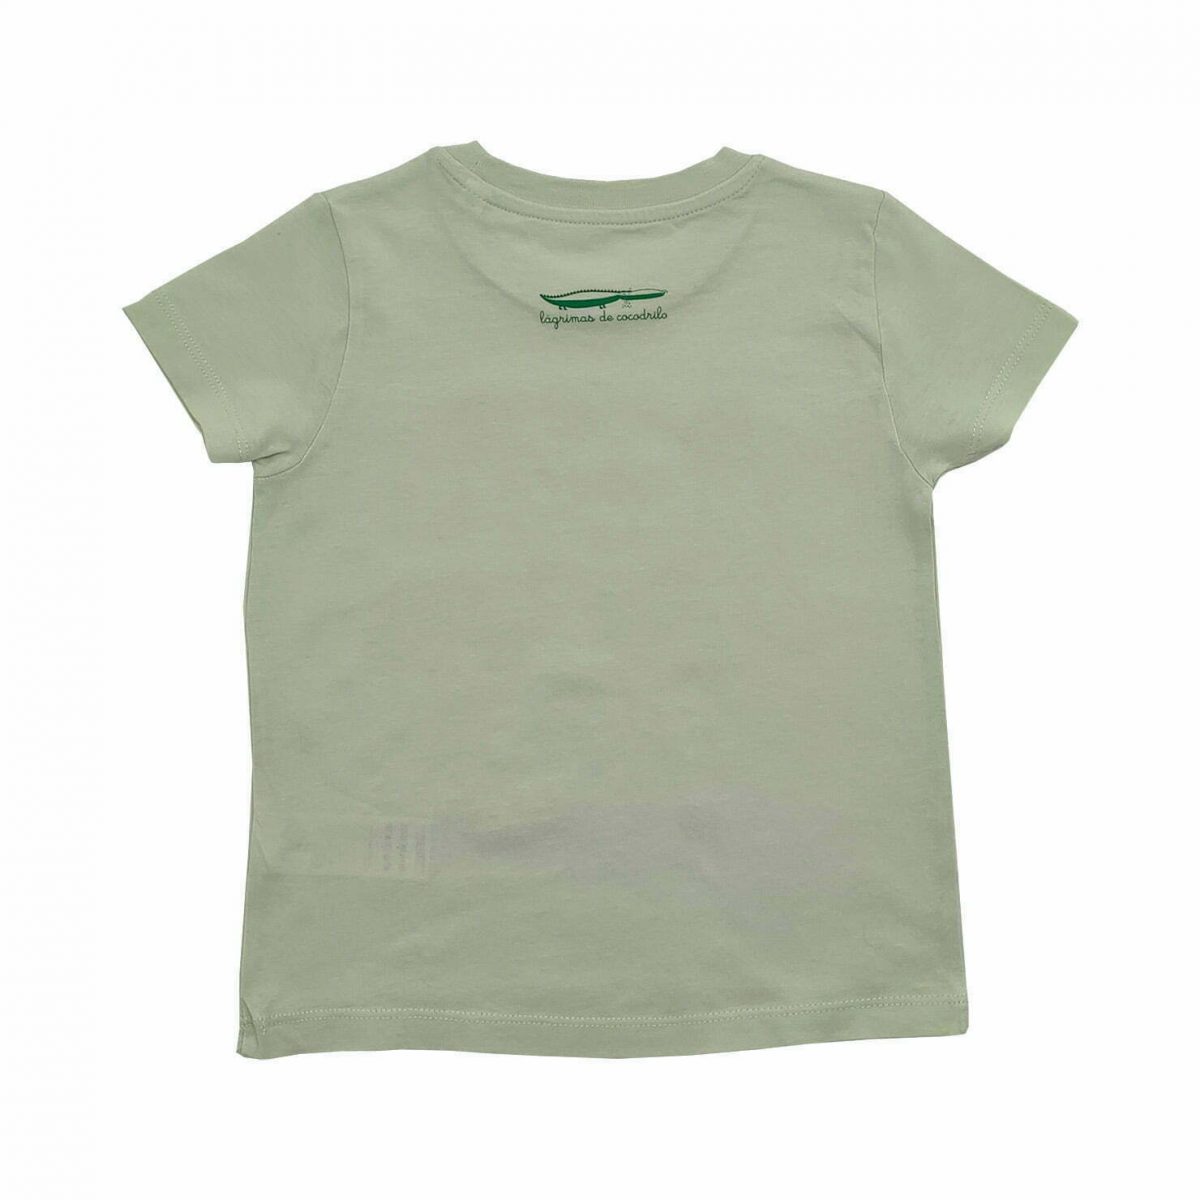 tienda de ropa de niño Camiseta Ausartak Infantil